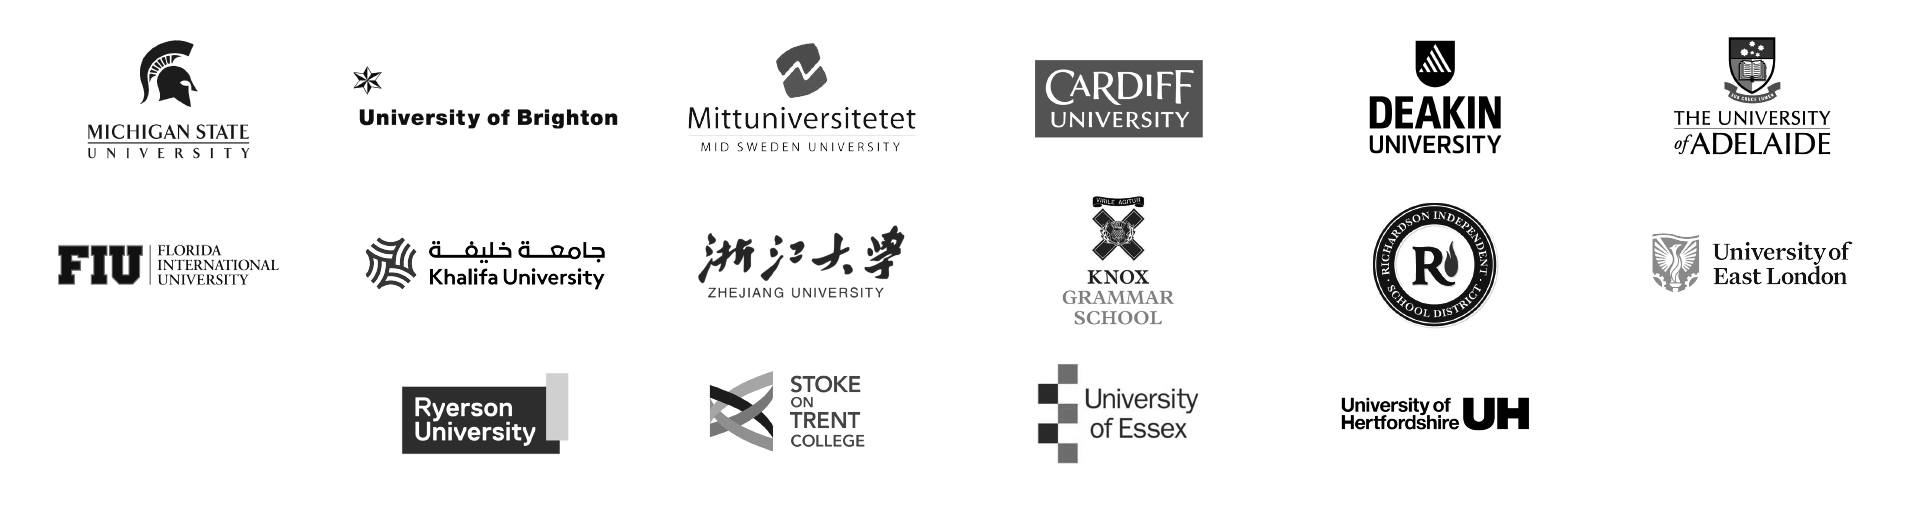 Black university logos on white background